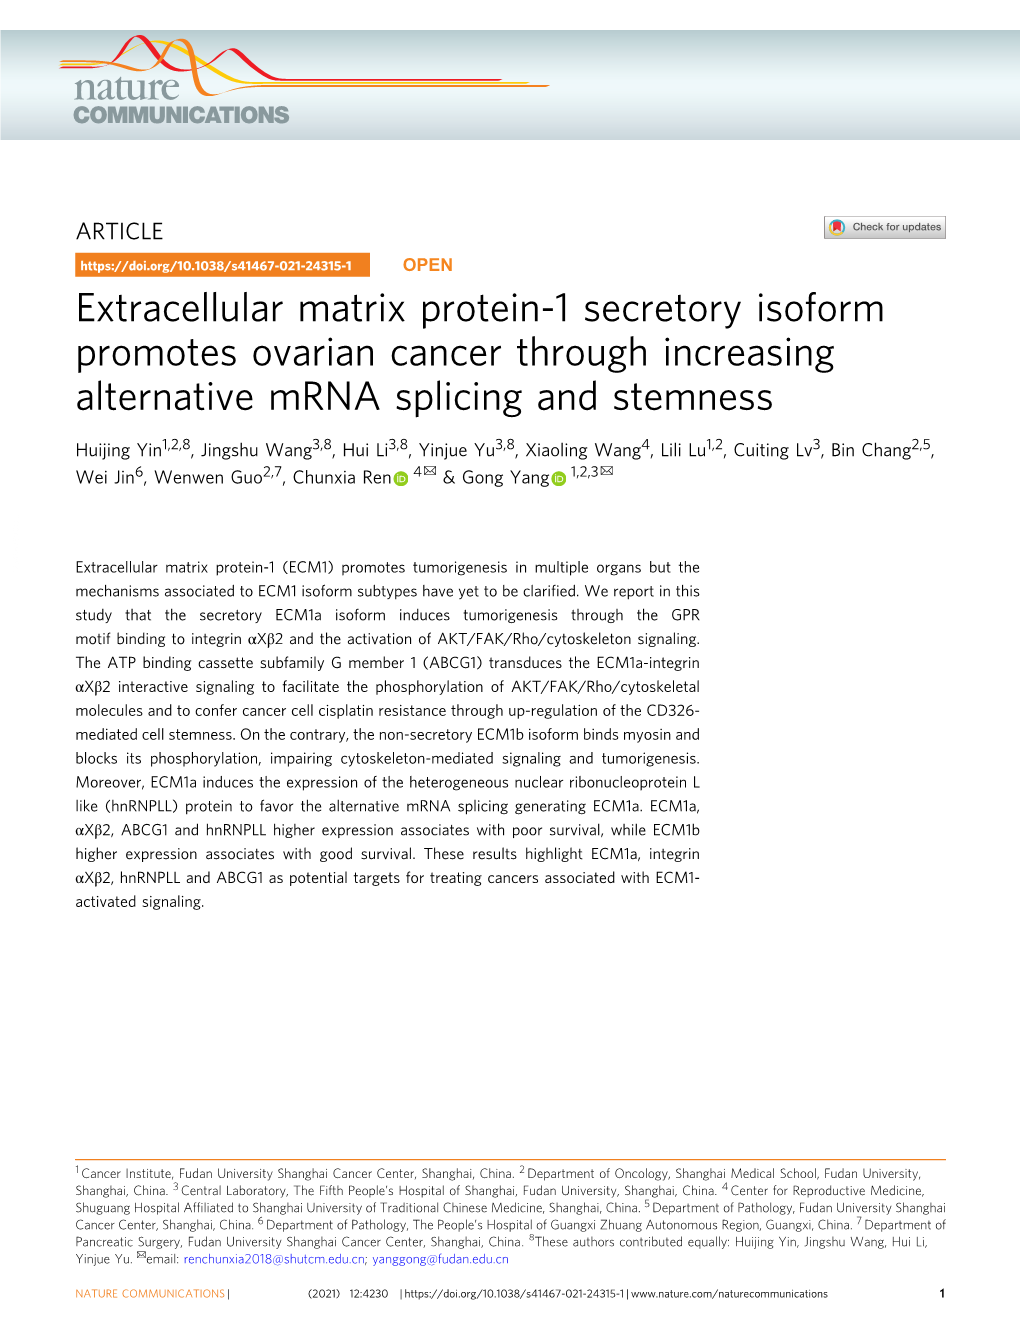 Extracellular Matrix Protein-1 Secretory Isoform Promotes Ovarian Cancer Through Increasing Alternative Mrna Splicing and Stemness